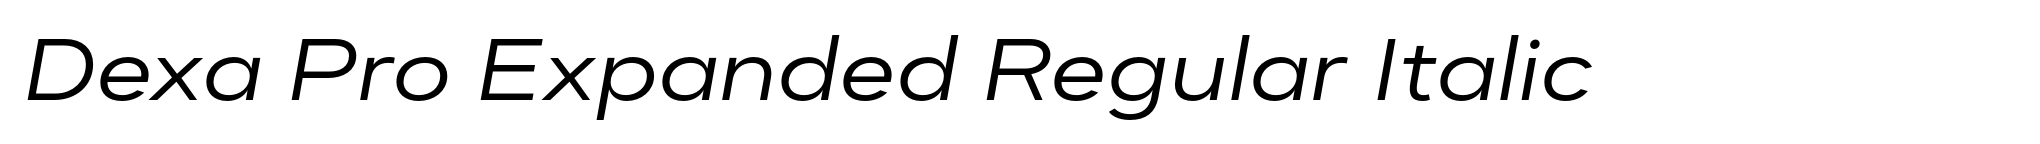 Dexa Pro Expanded Regular Italic image